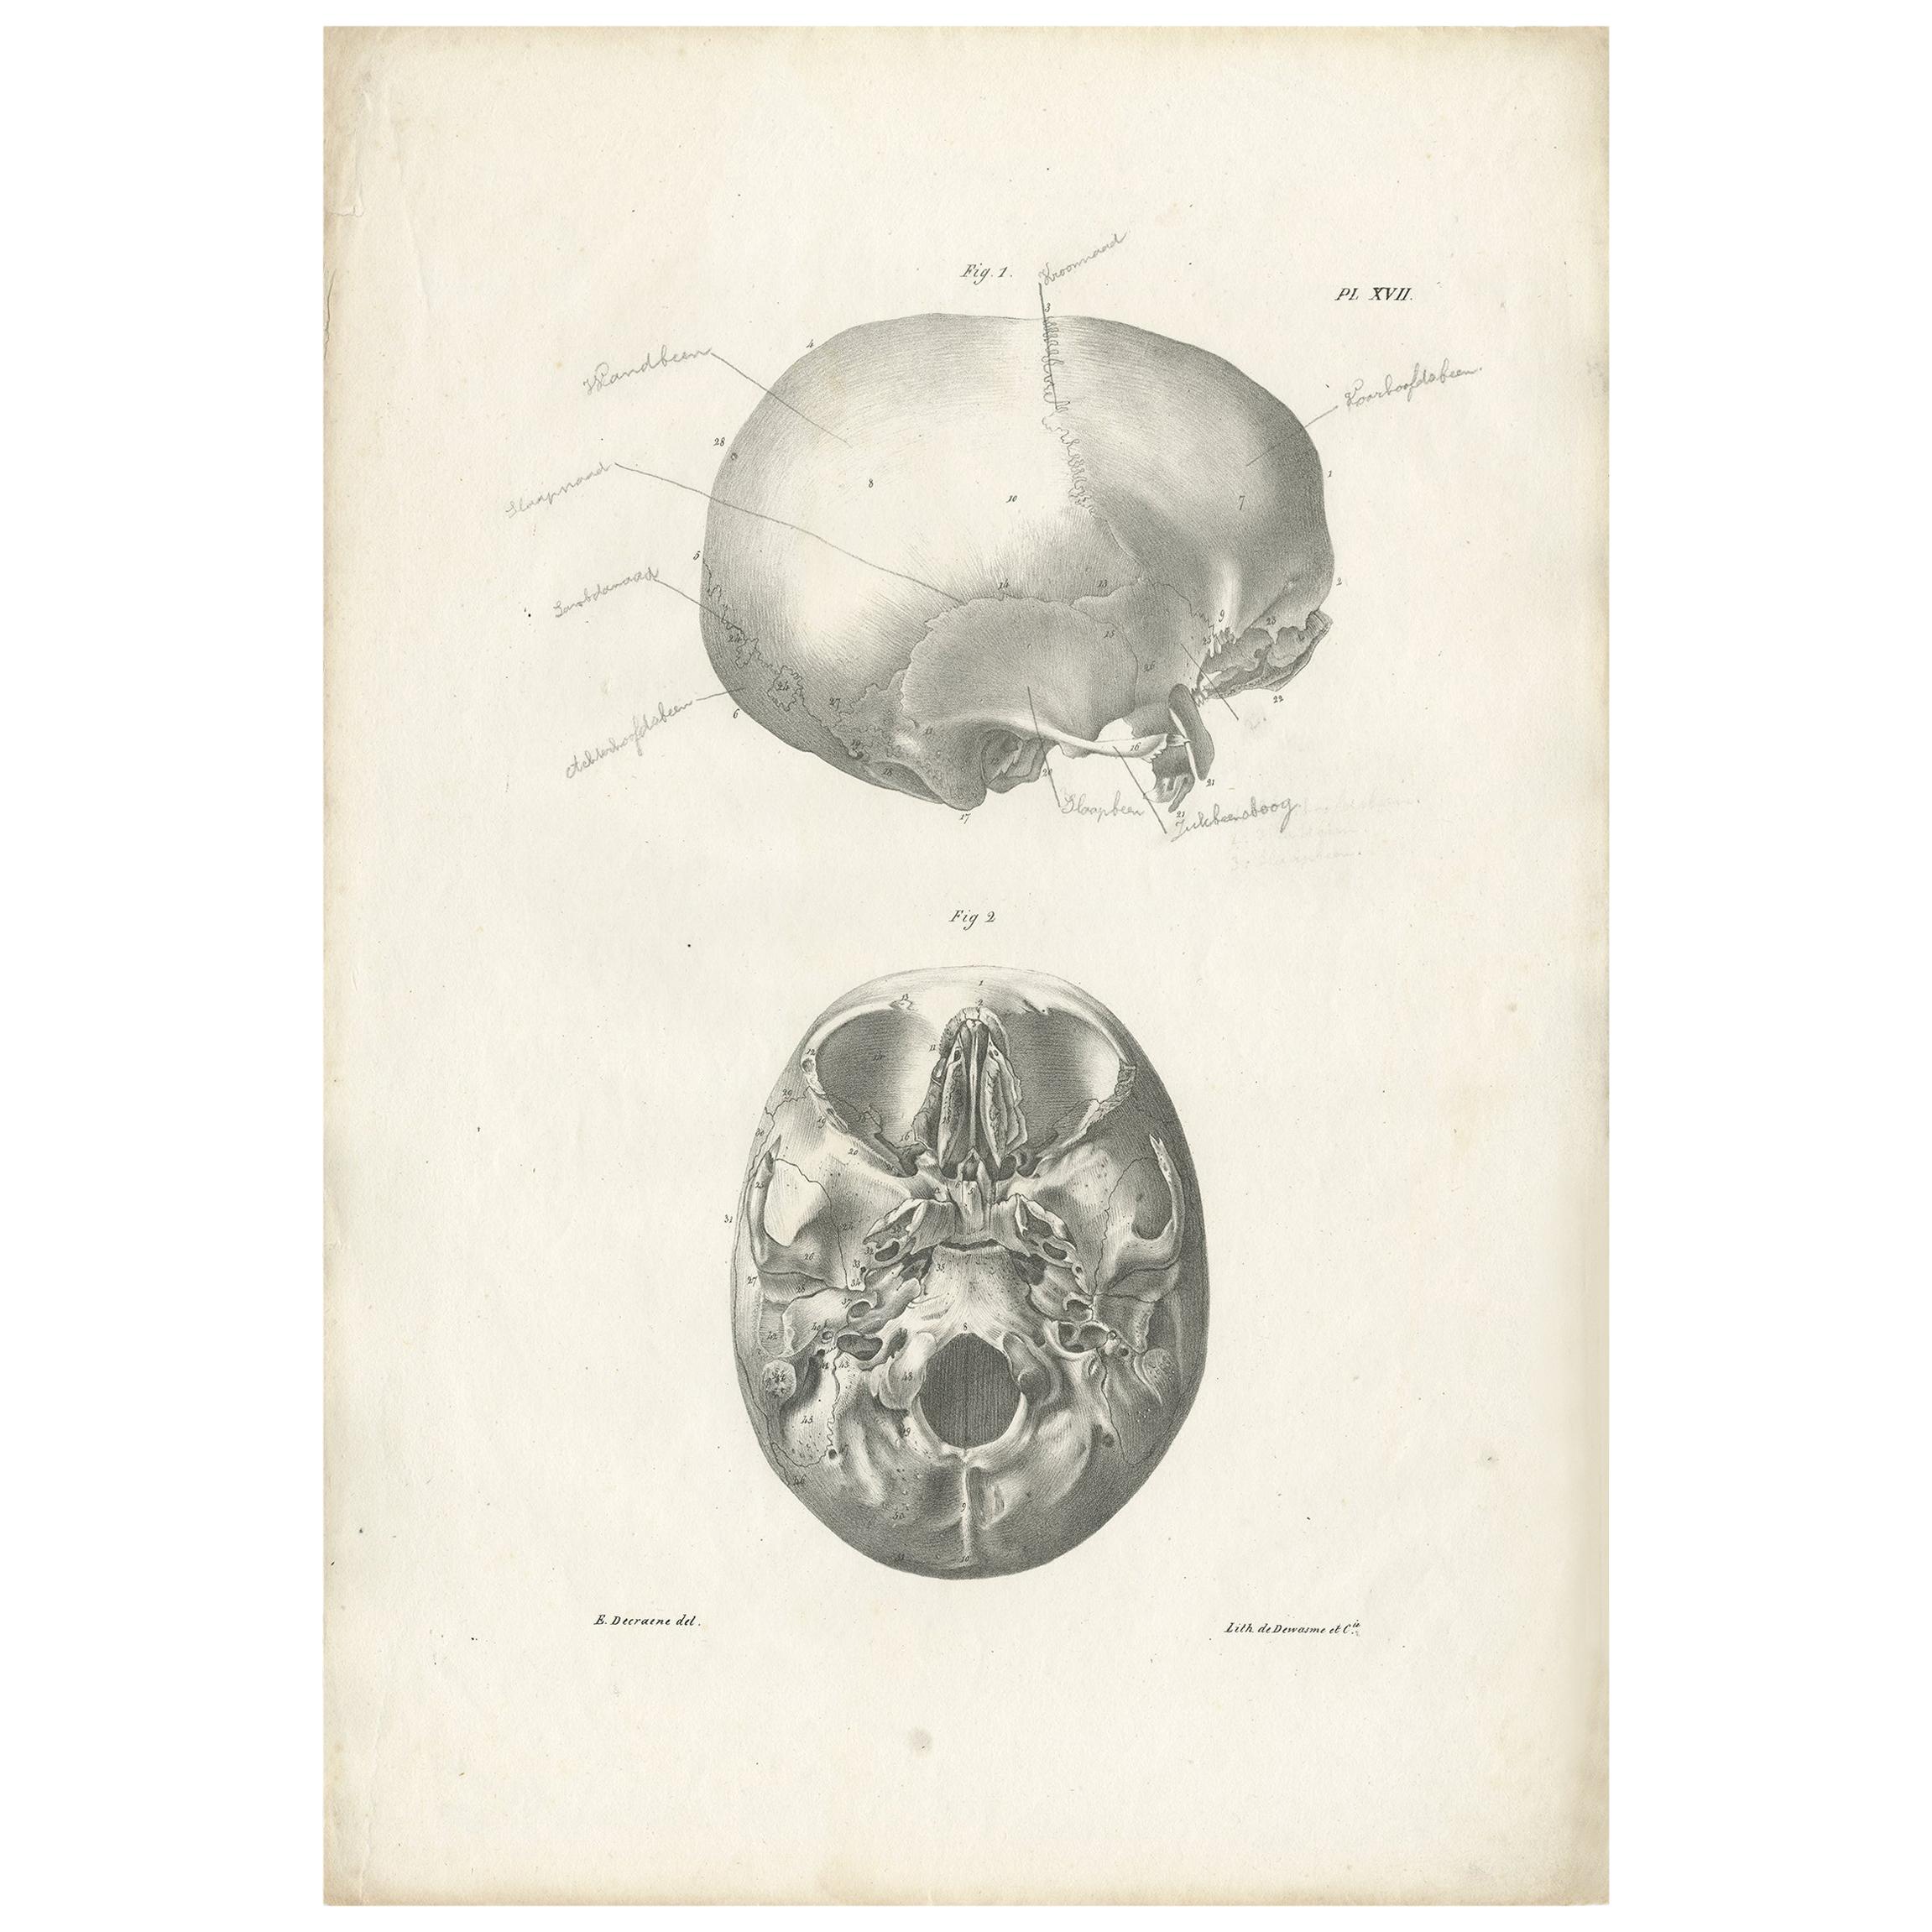 Pl. XVII Antique Anatomy / Medical Print of the Cranium by Cloquet, '1821'